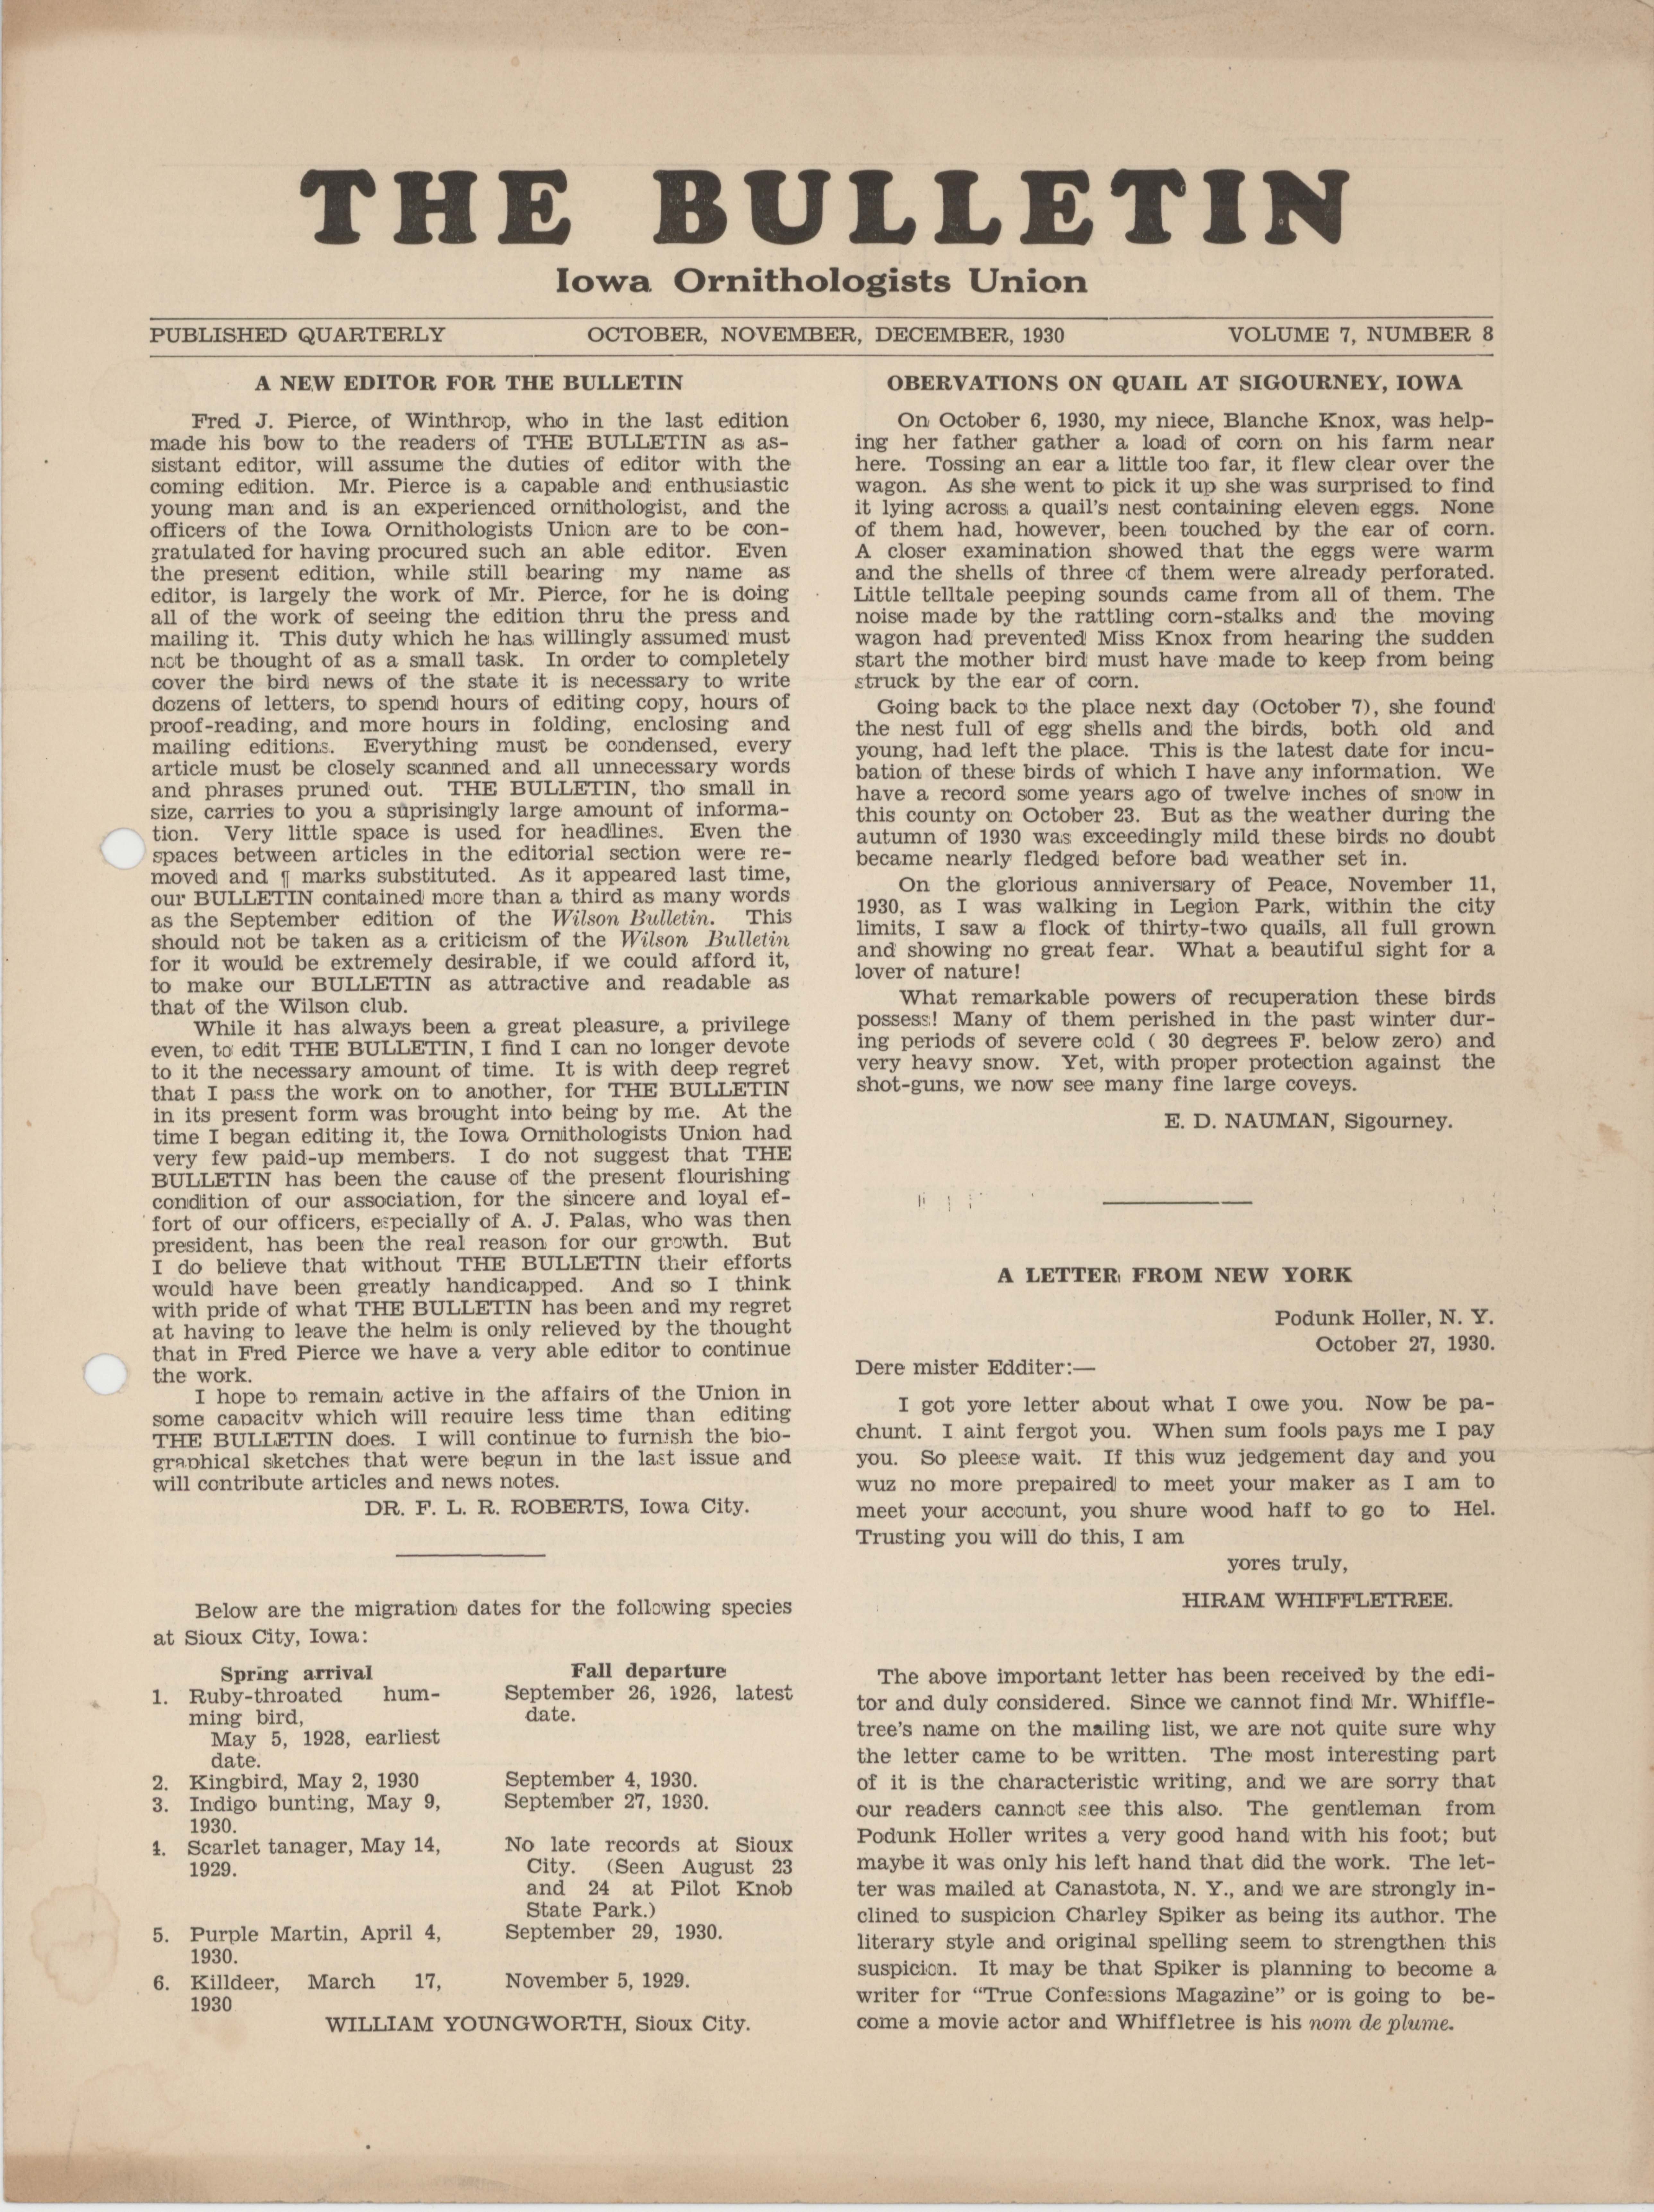 Bulletin (Iowa Ornithologists Union), Volume 7, Number 8, October/December 1930